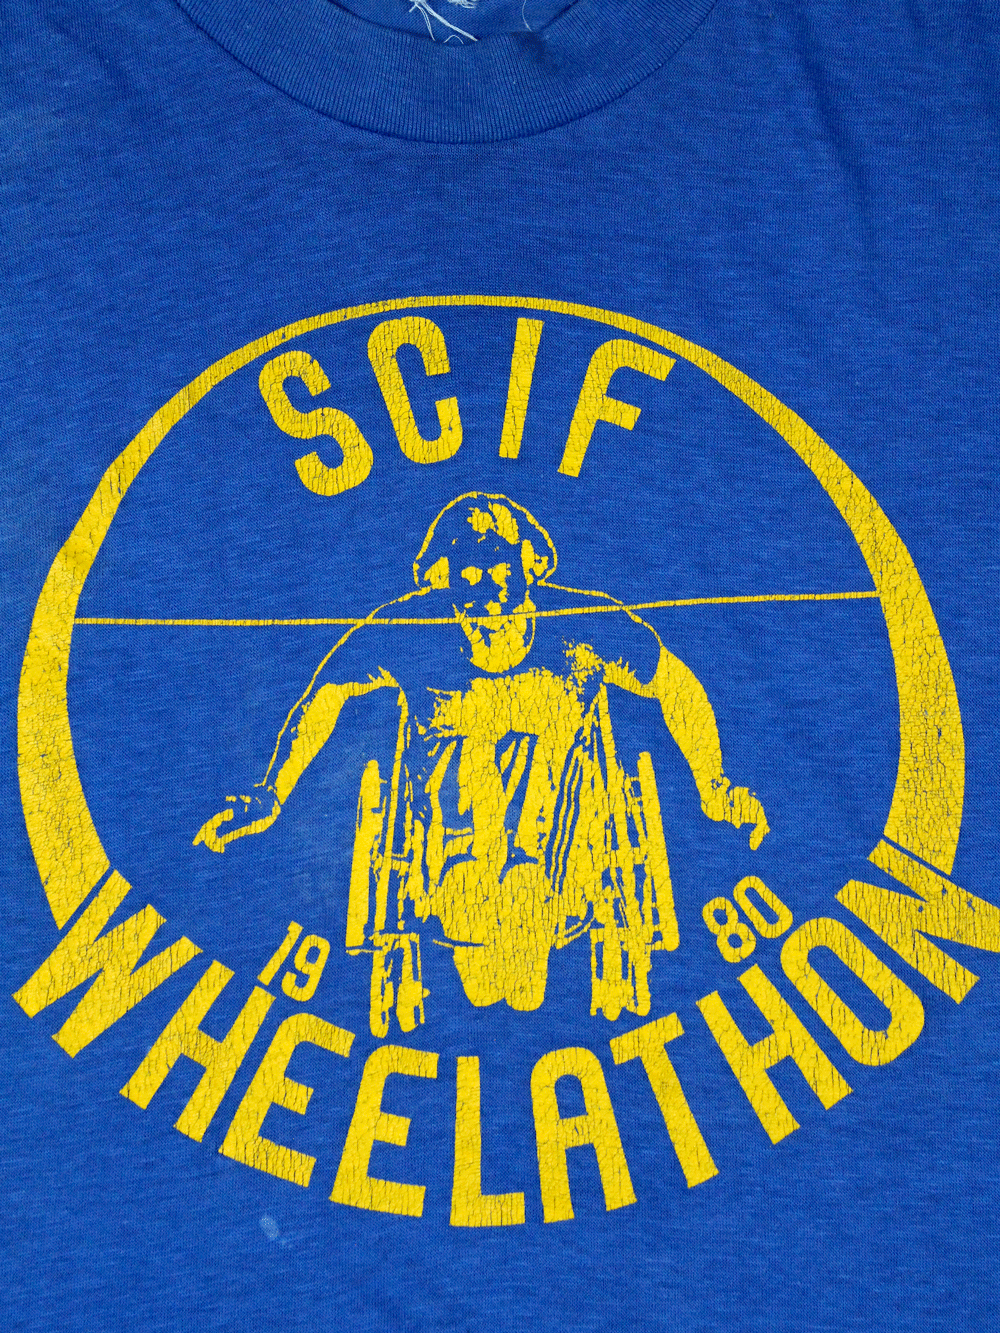 Vintage Wheelathon T-shirt